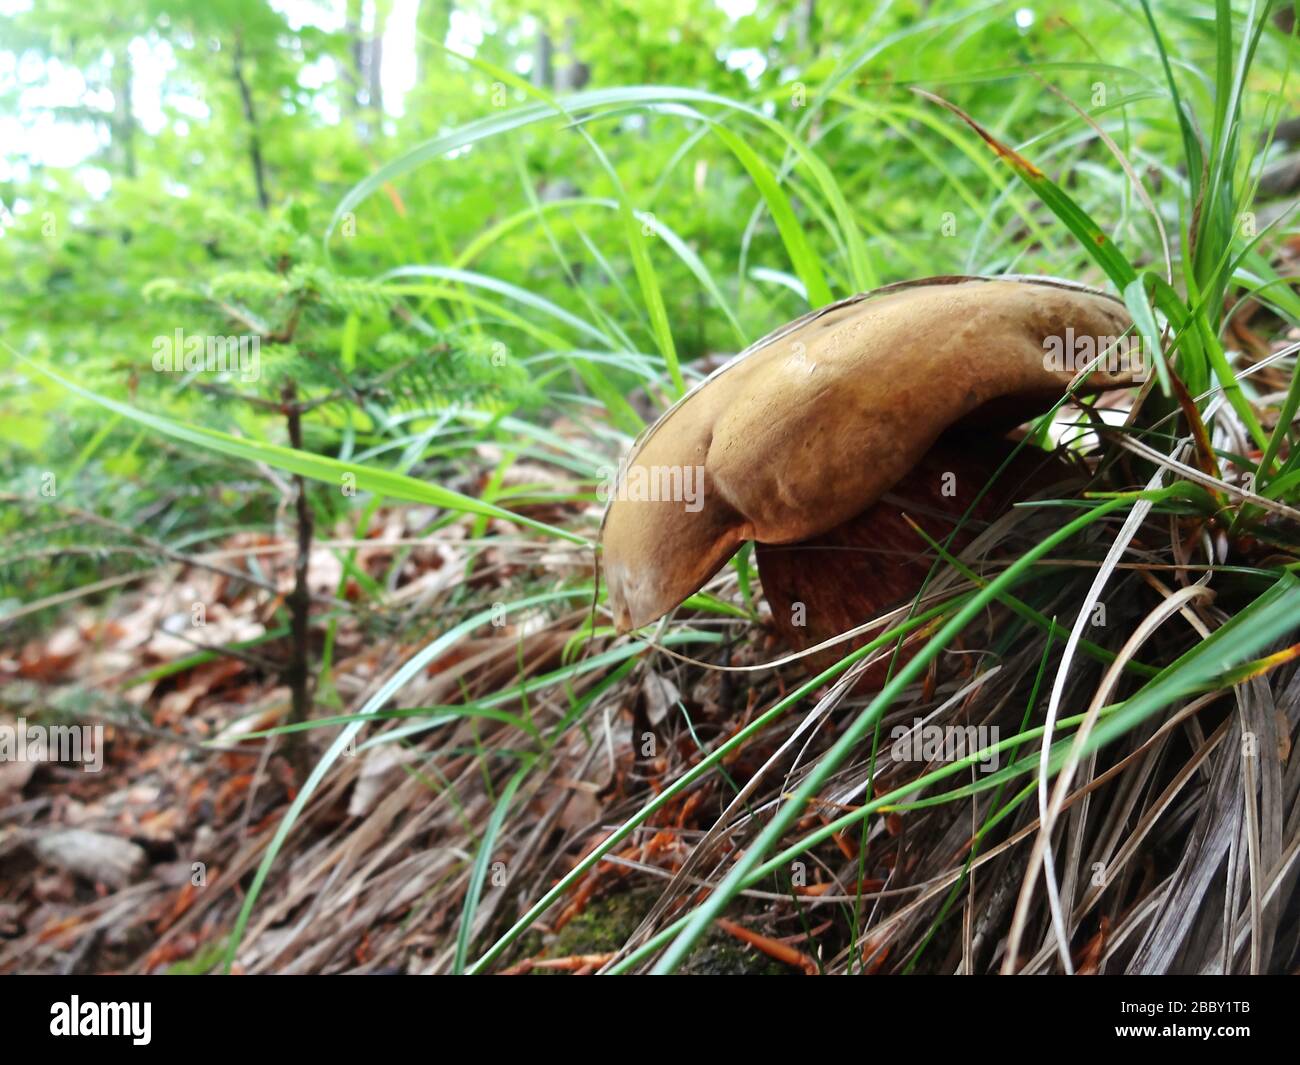 edible blacksmith mushroom in grass Stock Photo